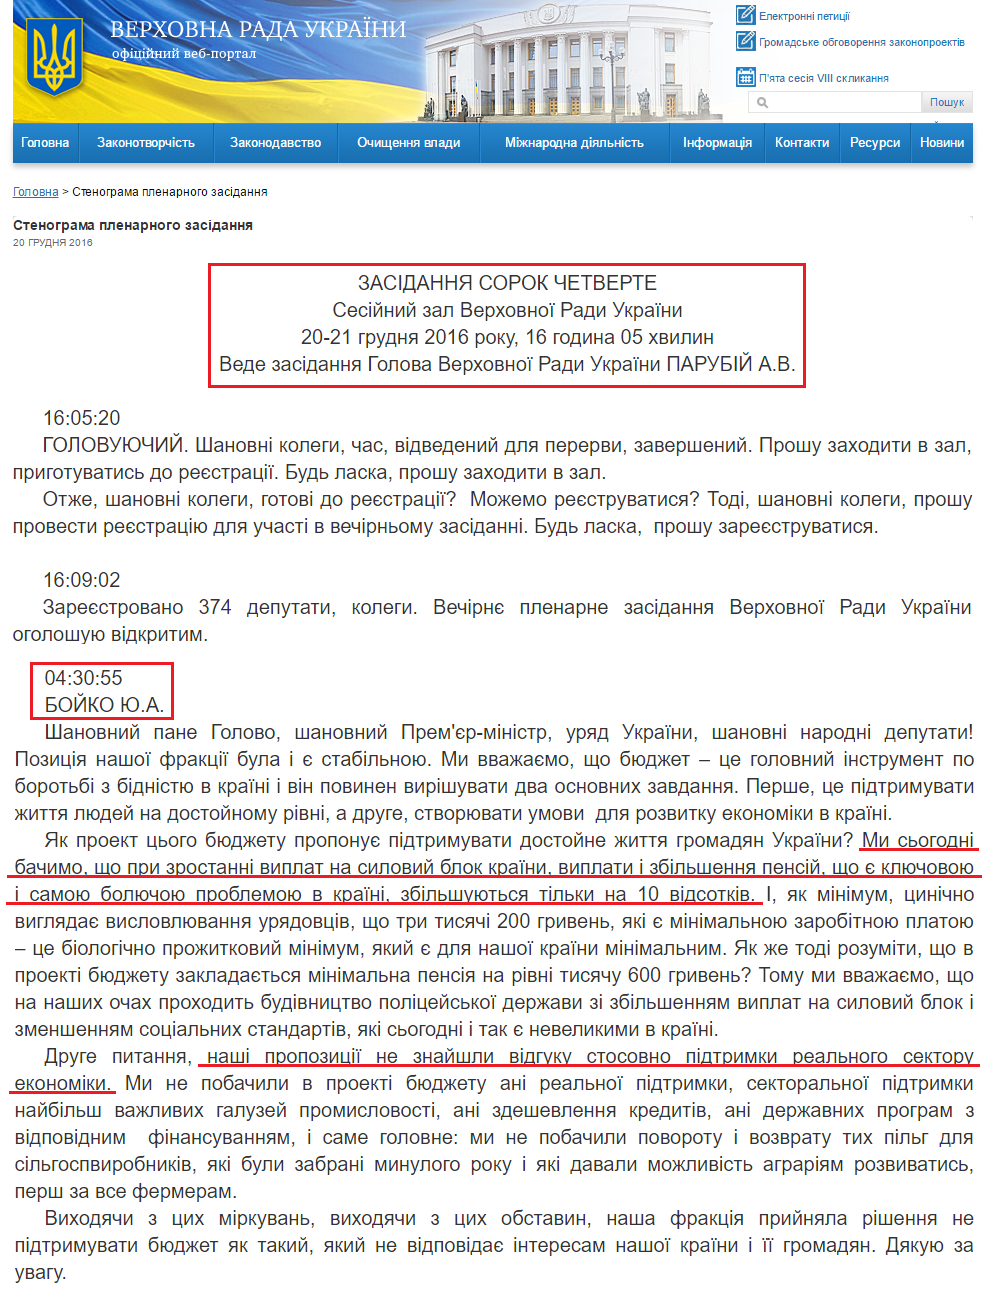 http://iportal.rada.gov.ua/meeting/stenogr/show/6388.html